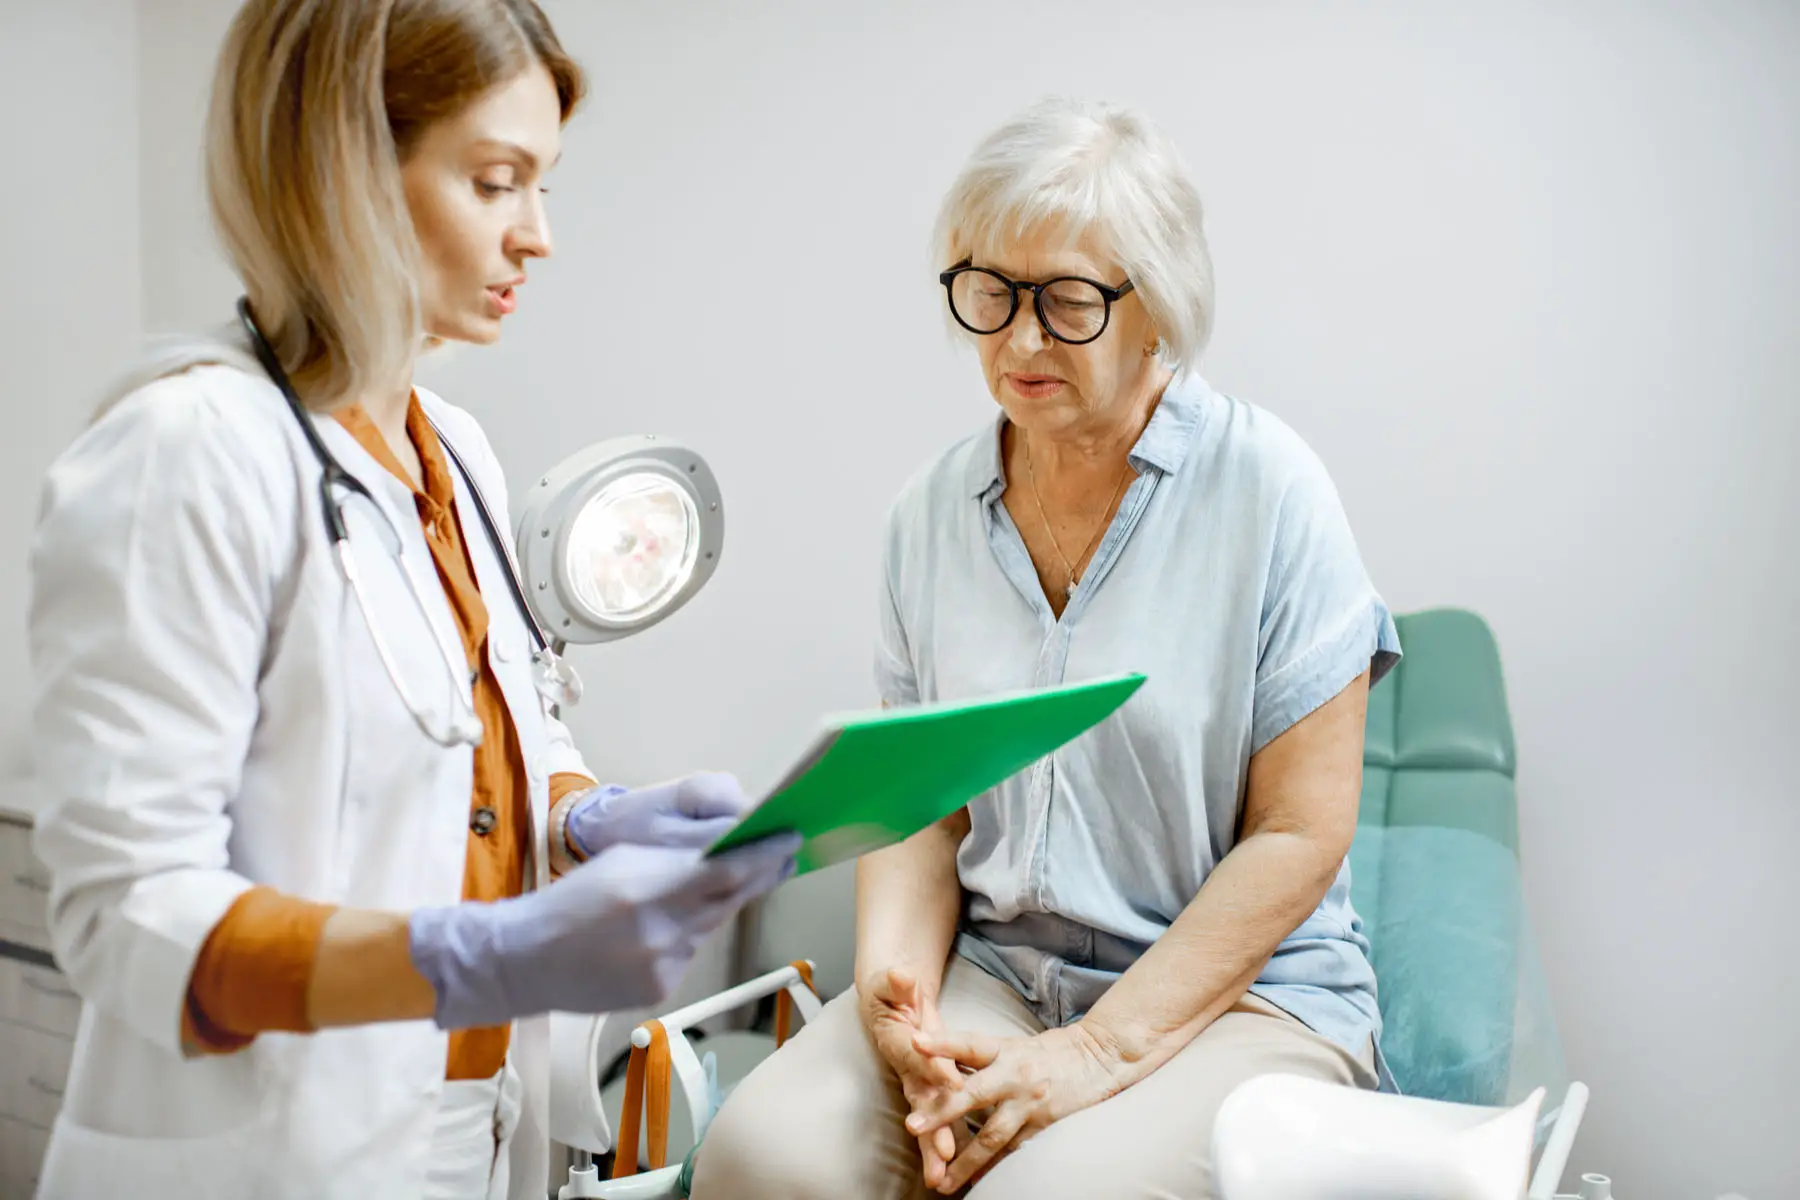 Luxembourg women's healthcare: doctor and menopausal patient